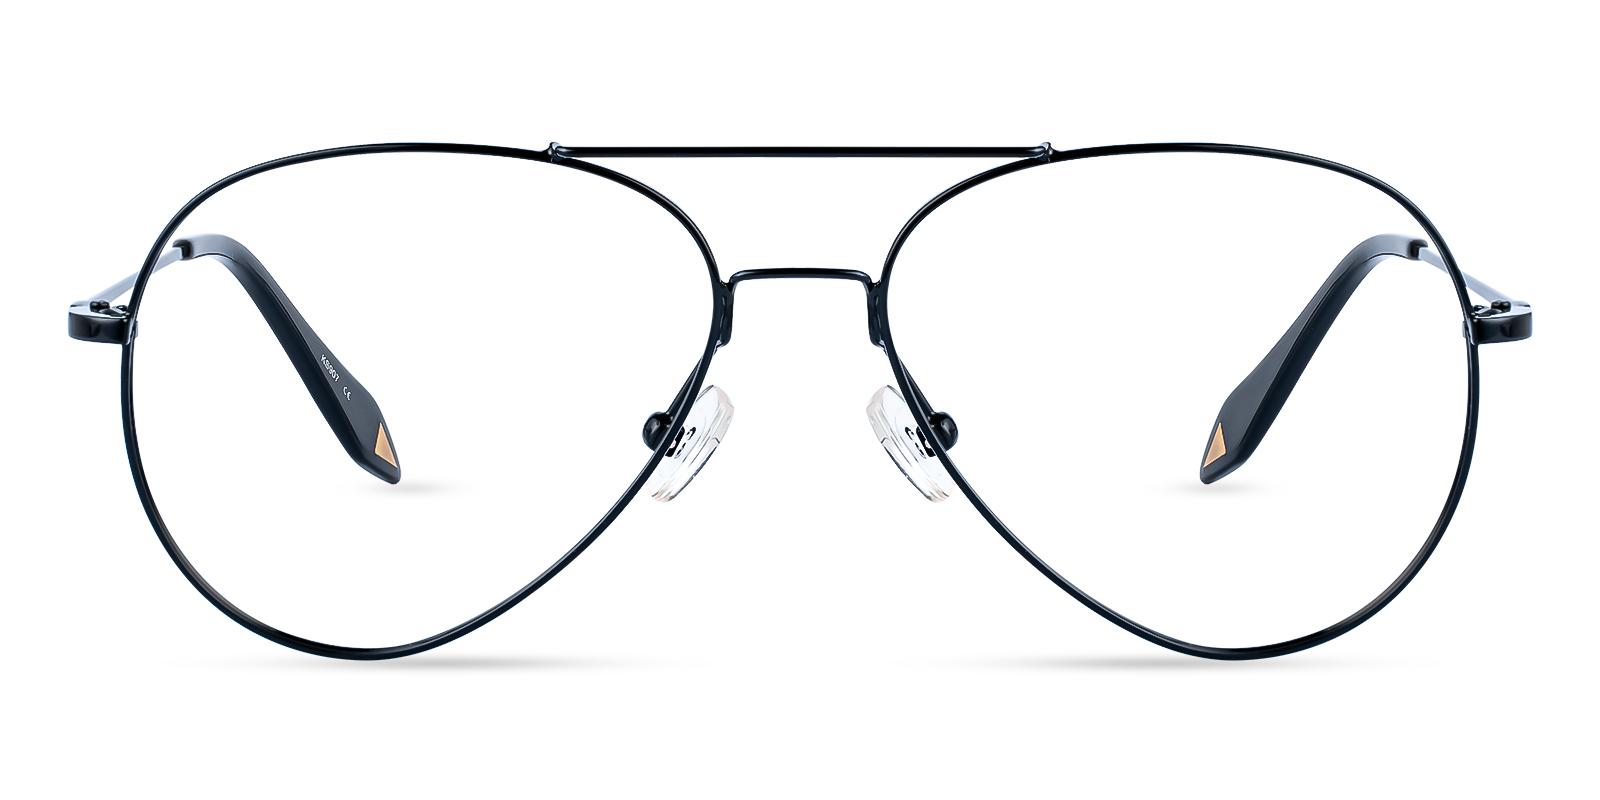 Malawi Black Metal Eyeglasses , NosePads Frames from ABBE Glasses